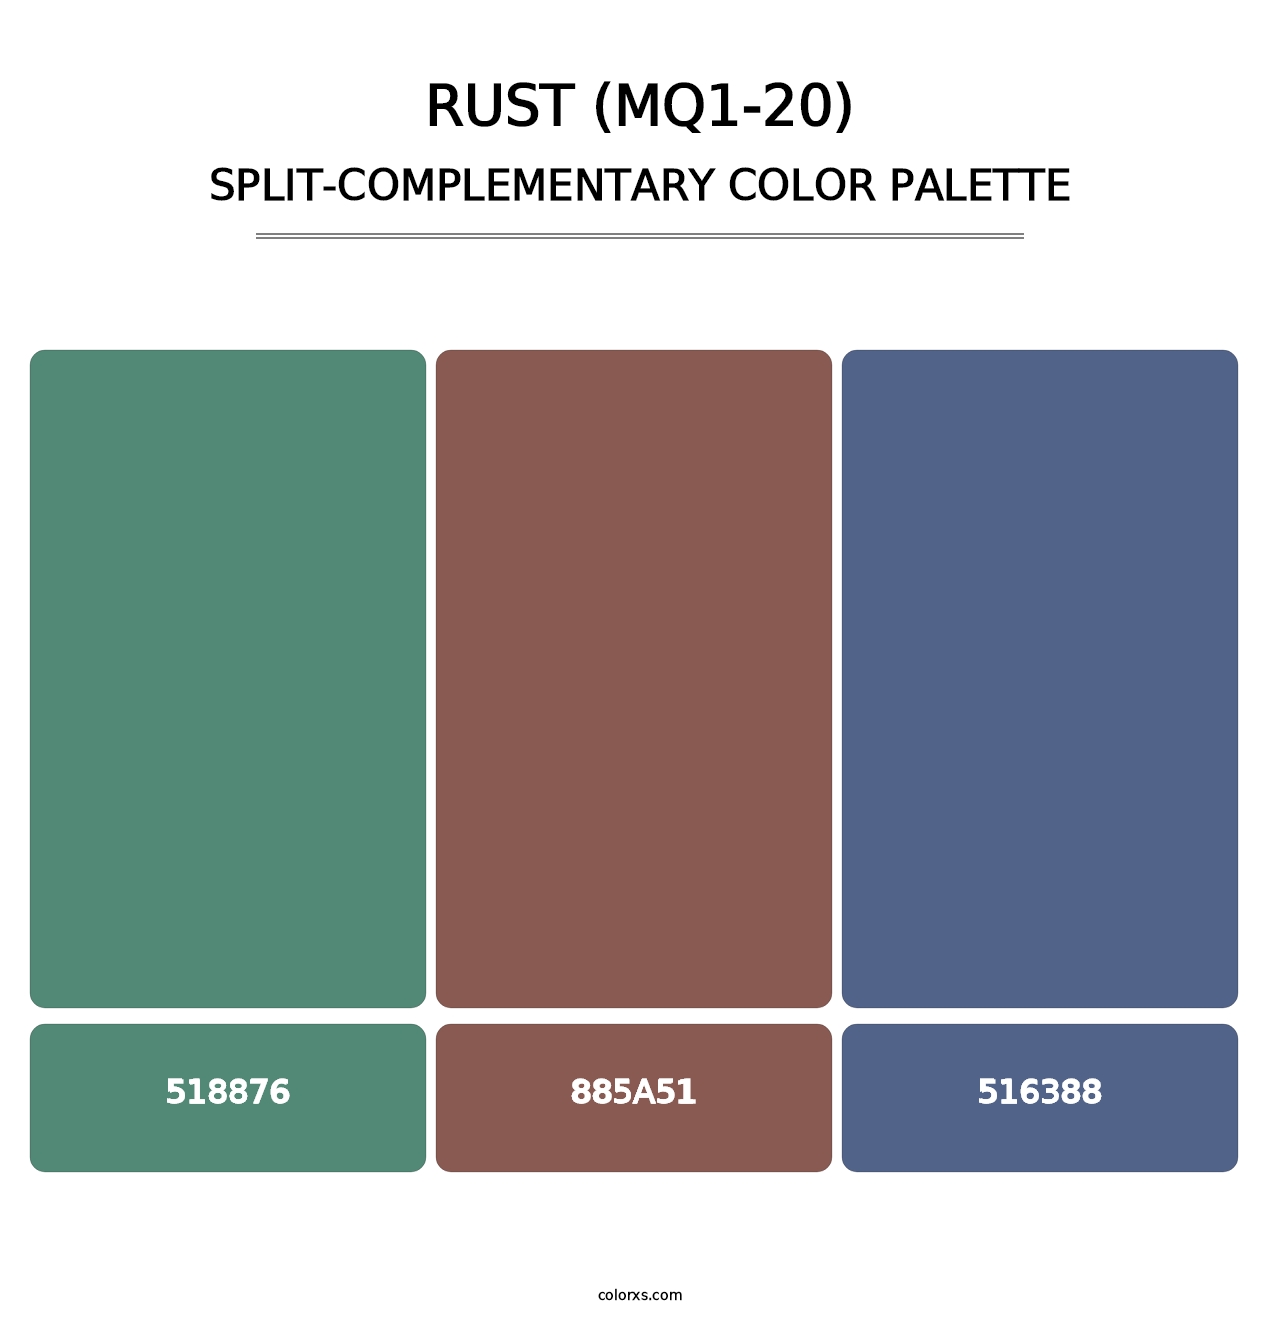 Rust (MQ1-20) - Split-Complementary Color Palette